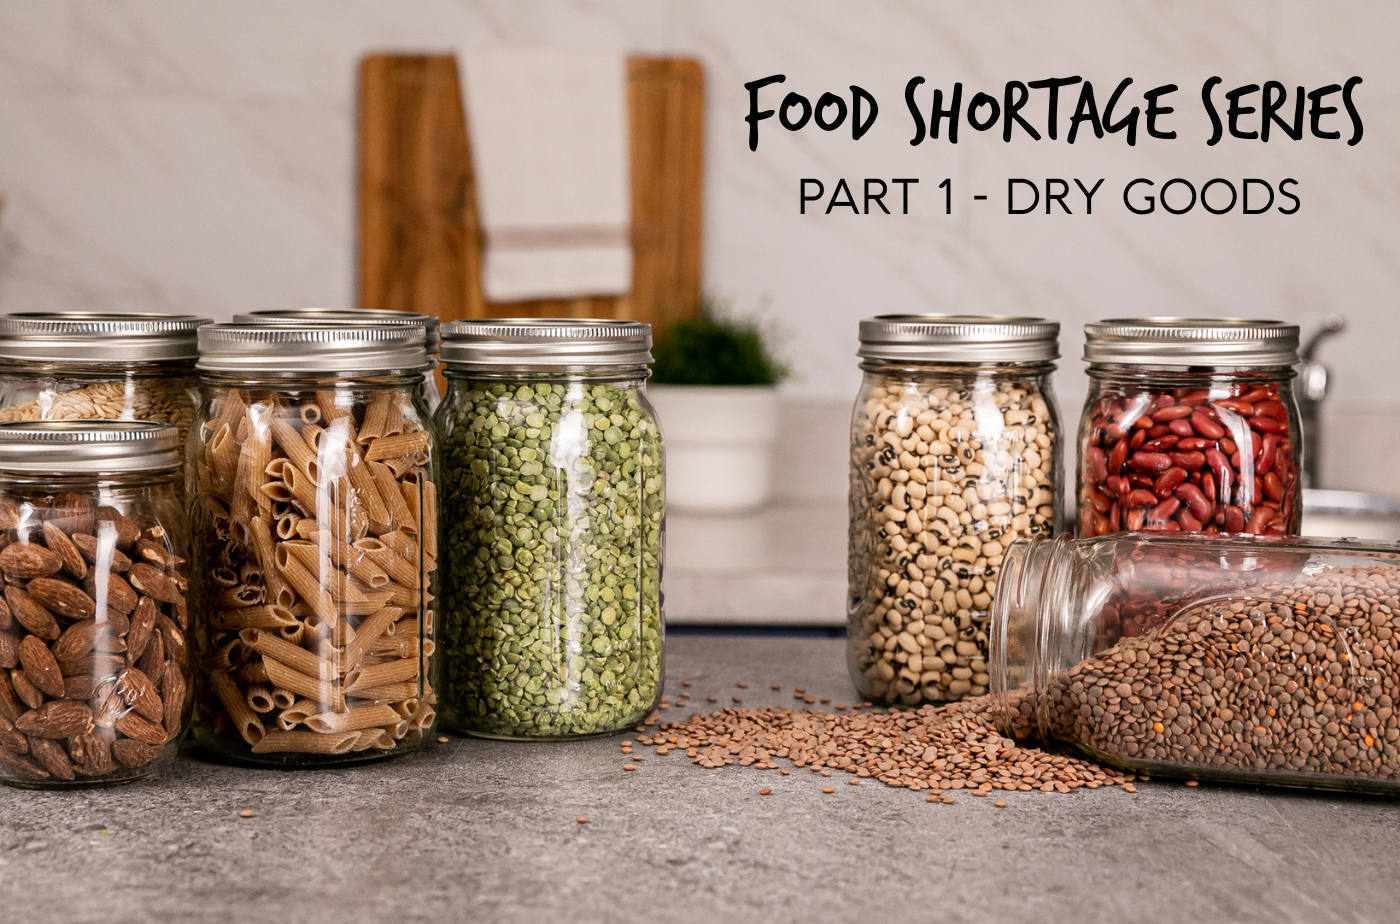 Food Shortage Series - Part 1 - Vacuum Sealing Dry Goods for